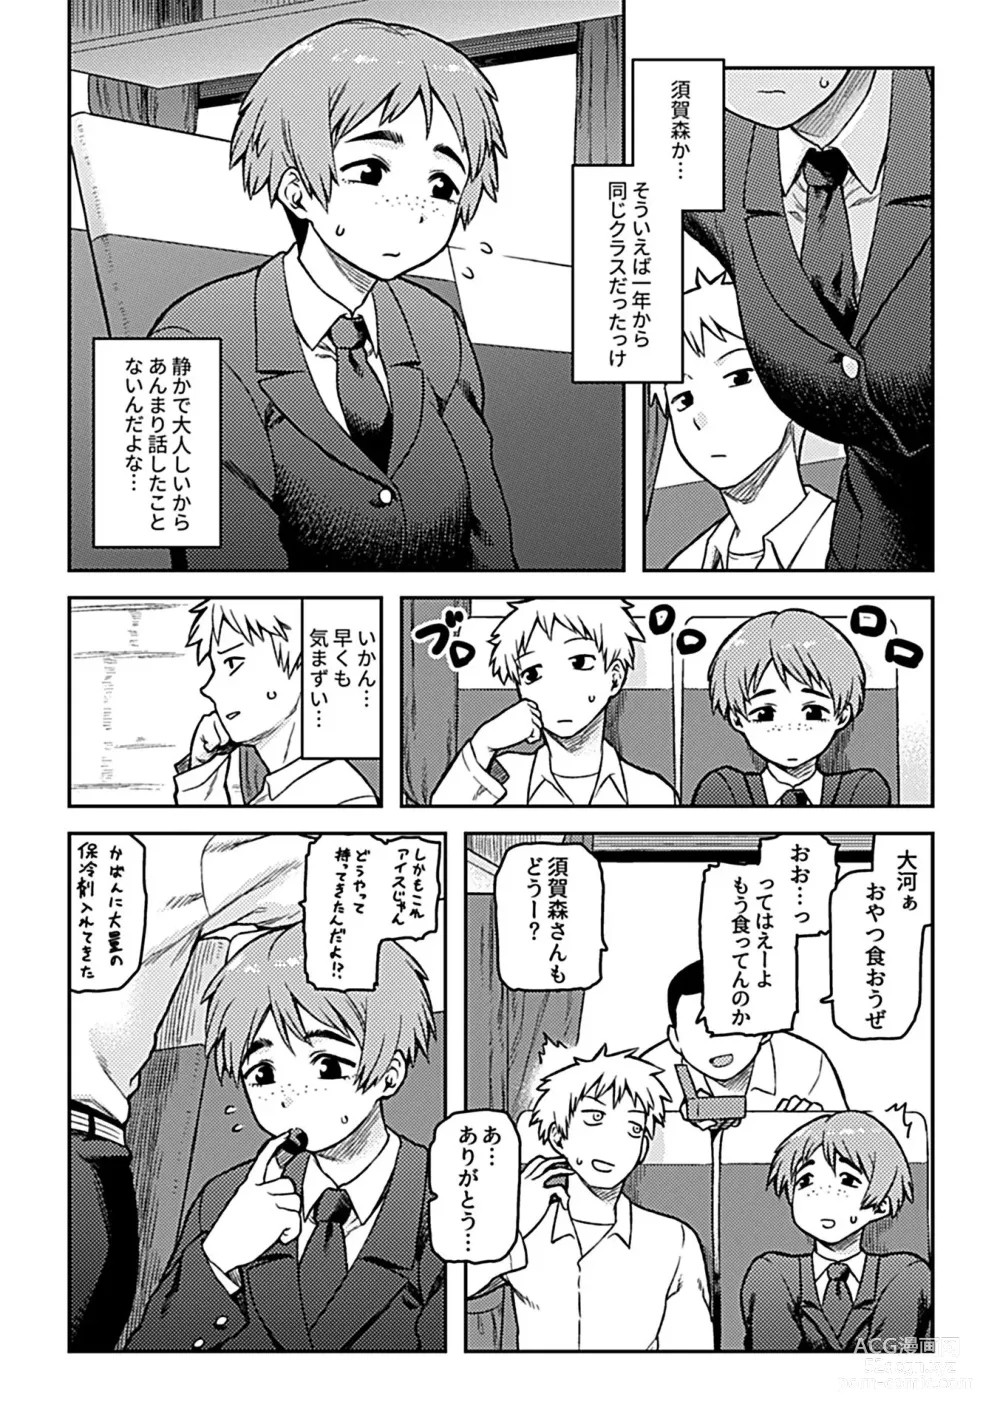 Page 6 of manga Aibiki